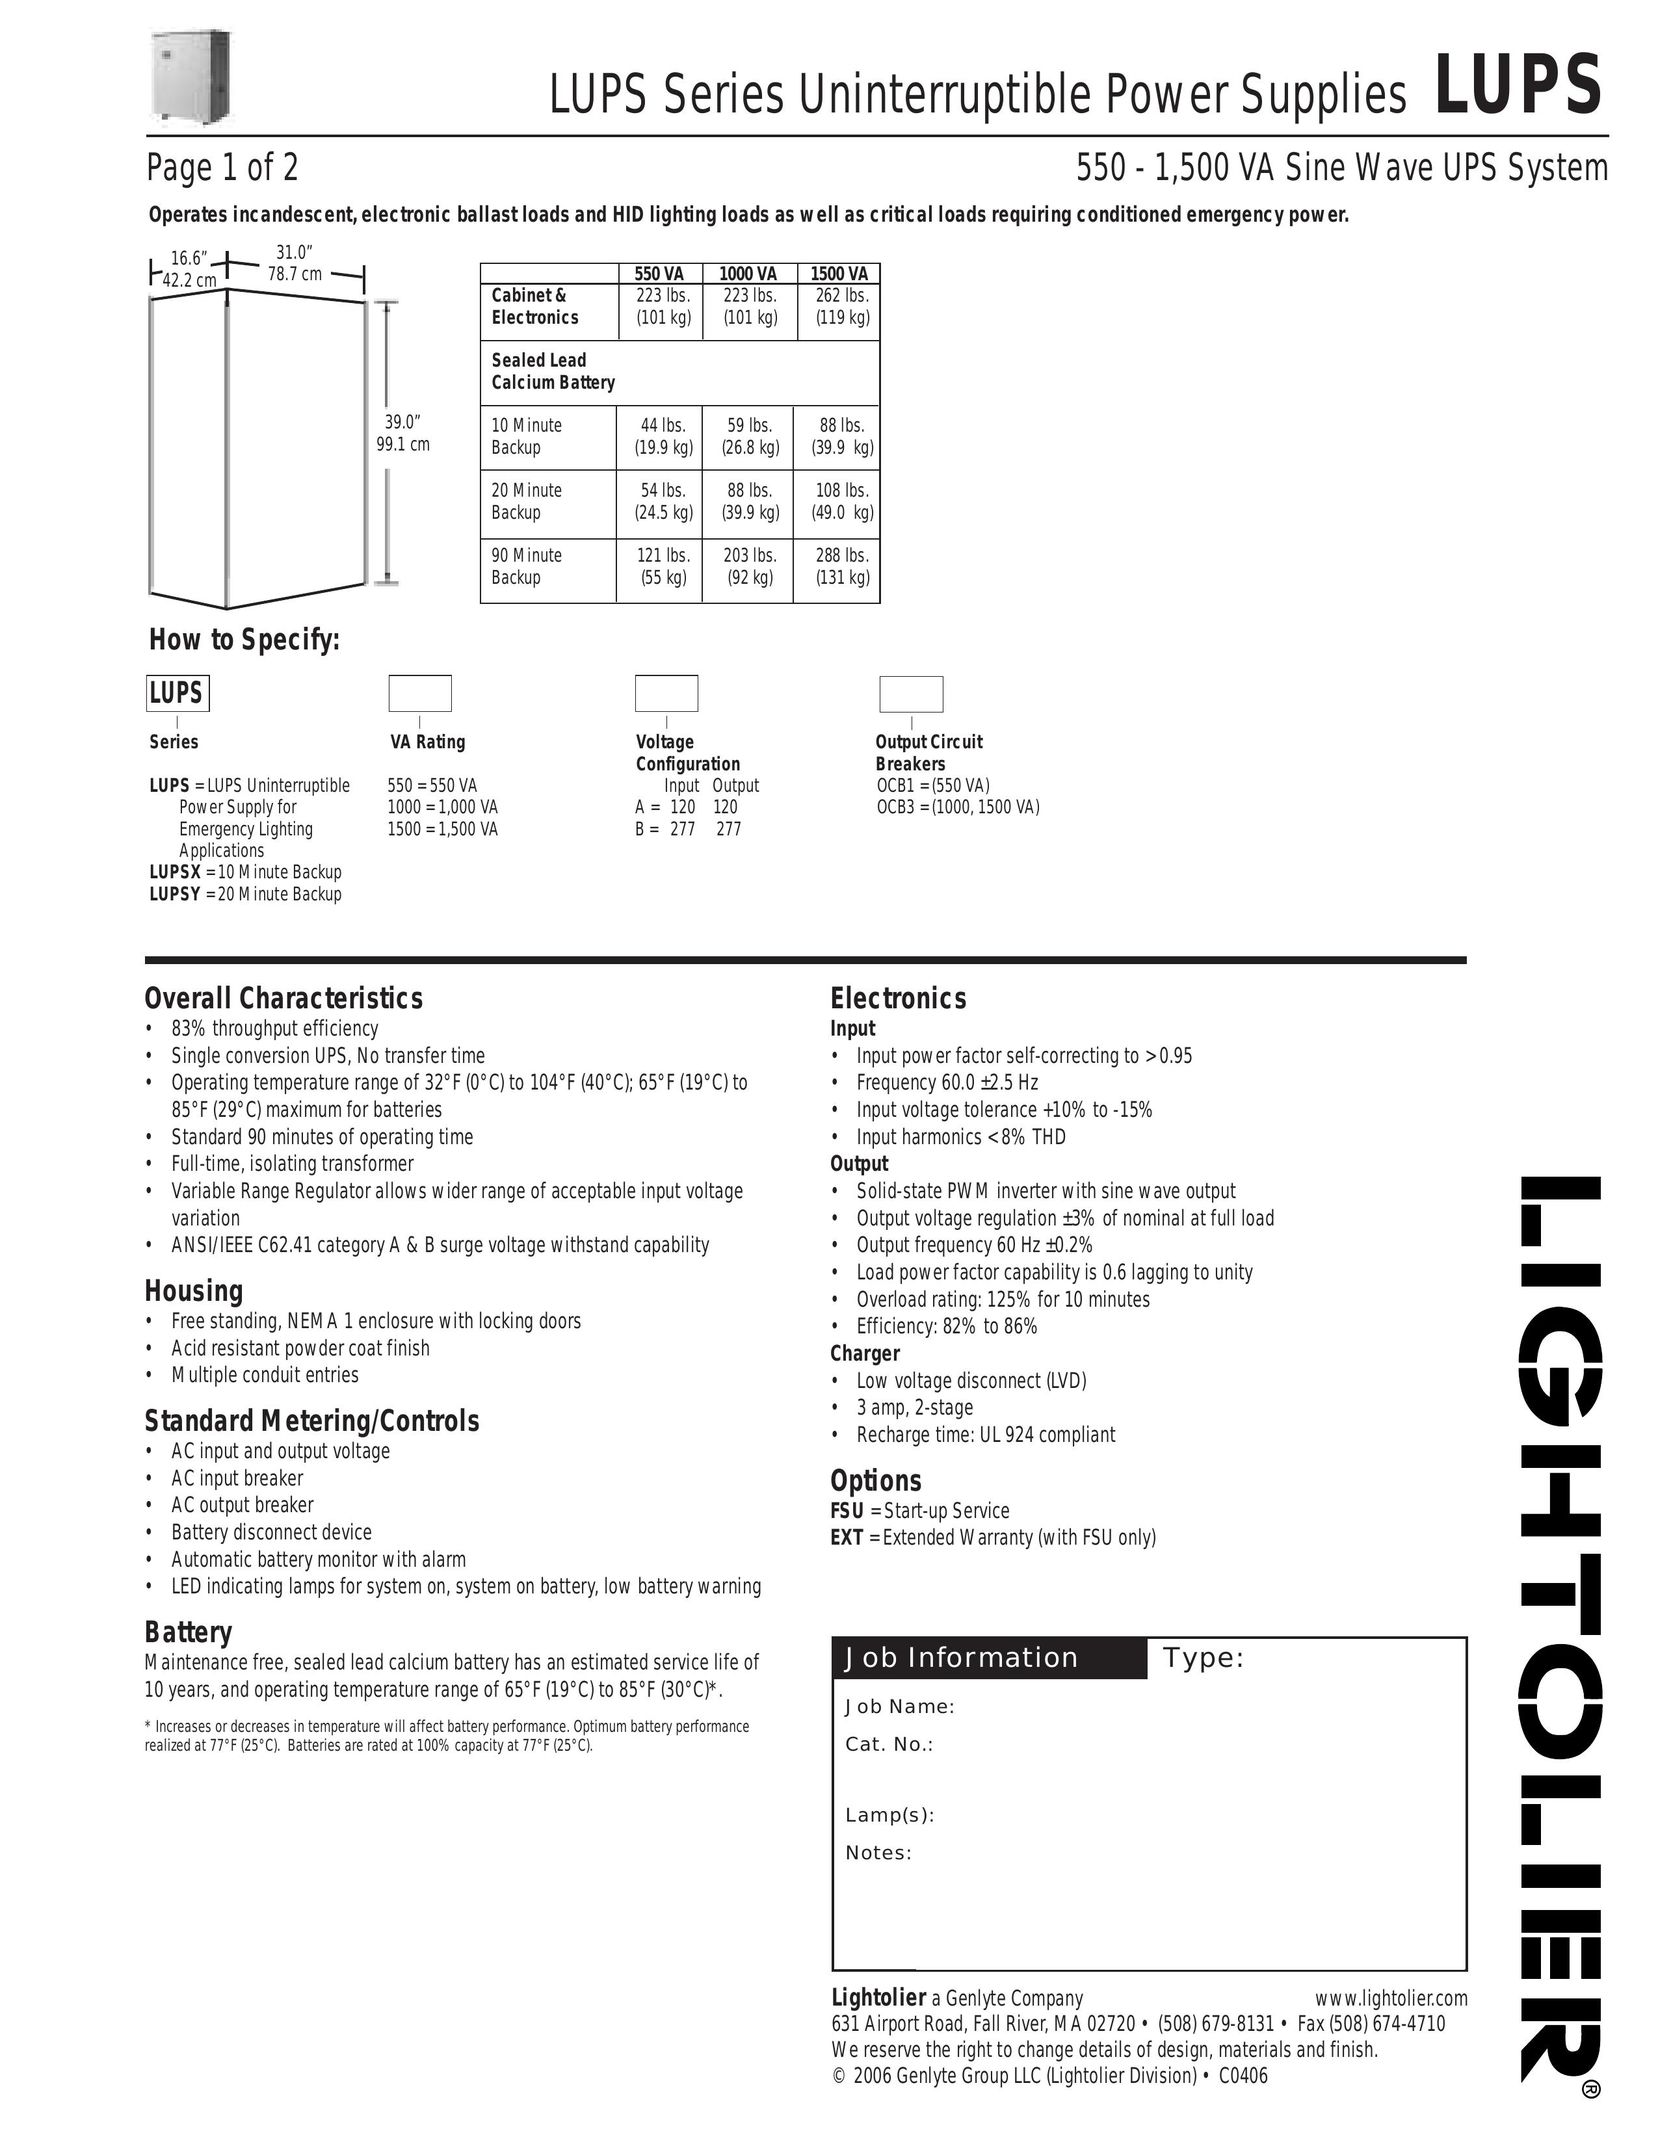 Lightolier LUPS Series Power Supply User Manual